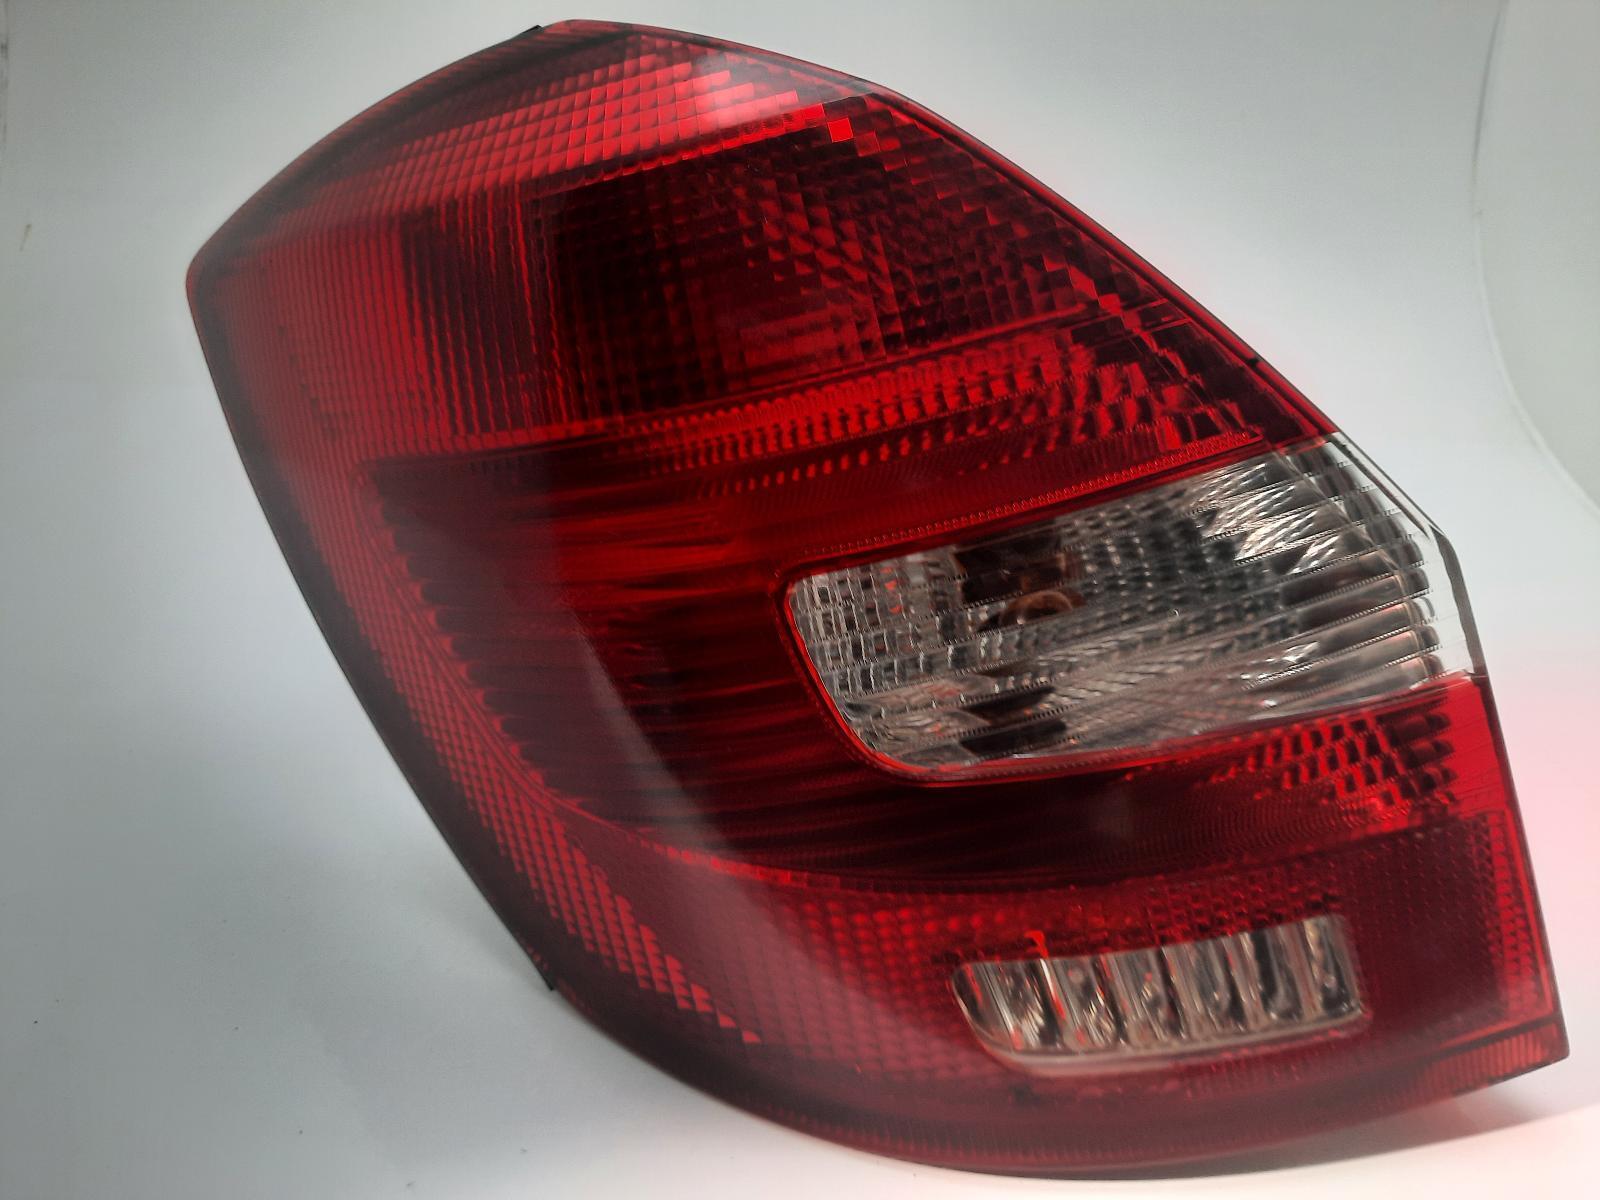 SKODA FABIA Tail Light Rear Lamp N/S 2007-2015 5 Door Hatchback LH  